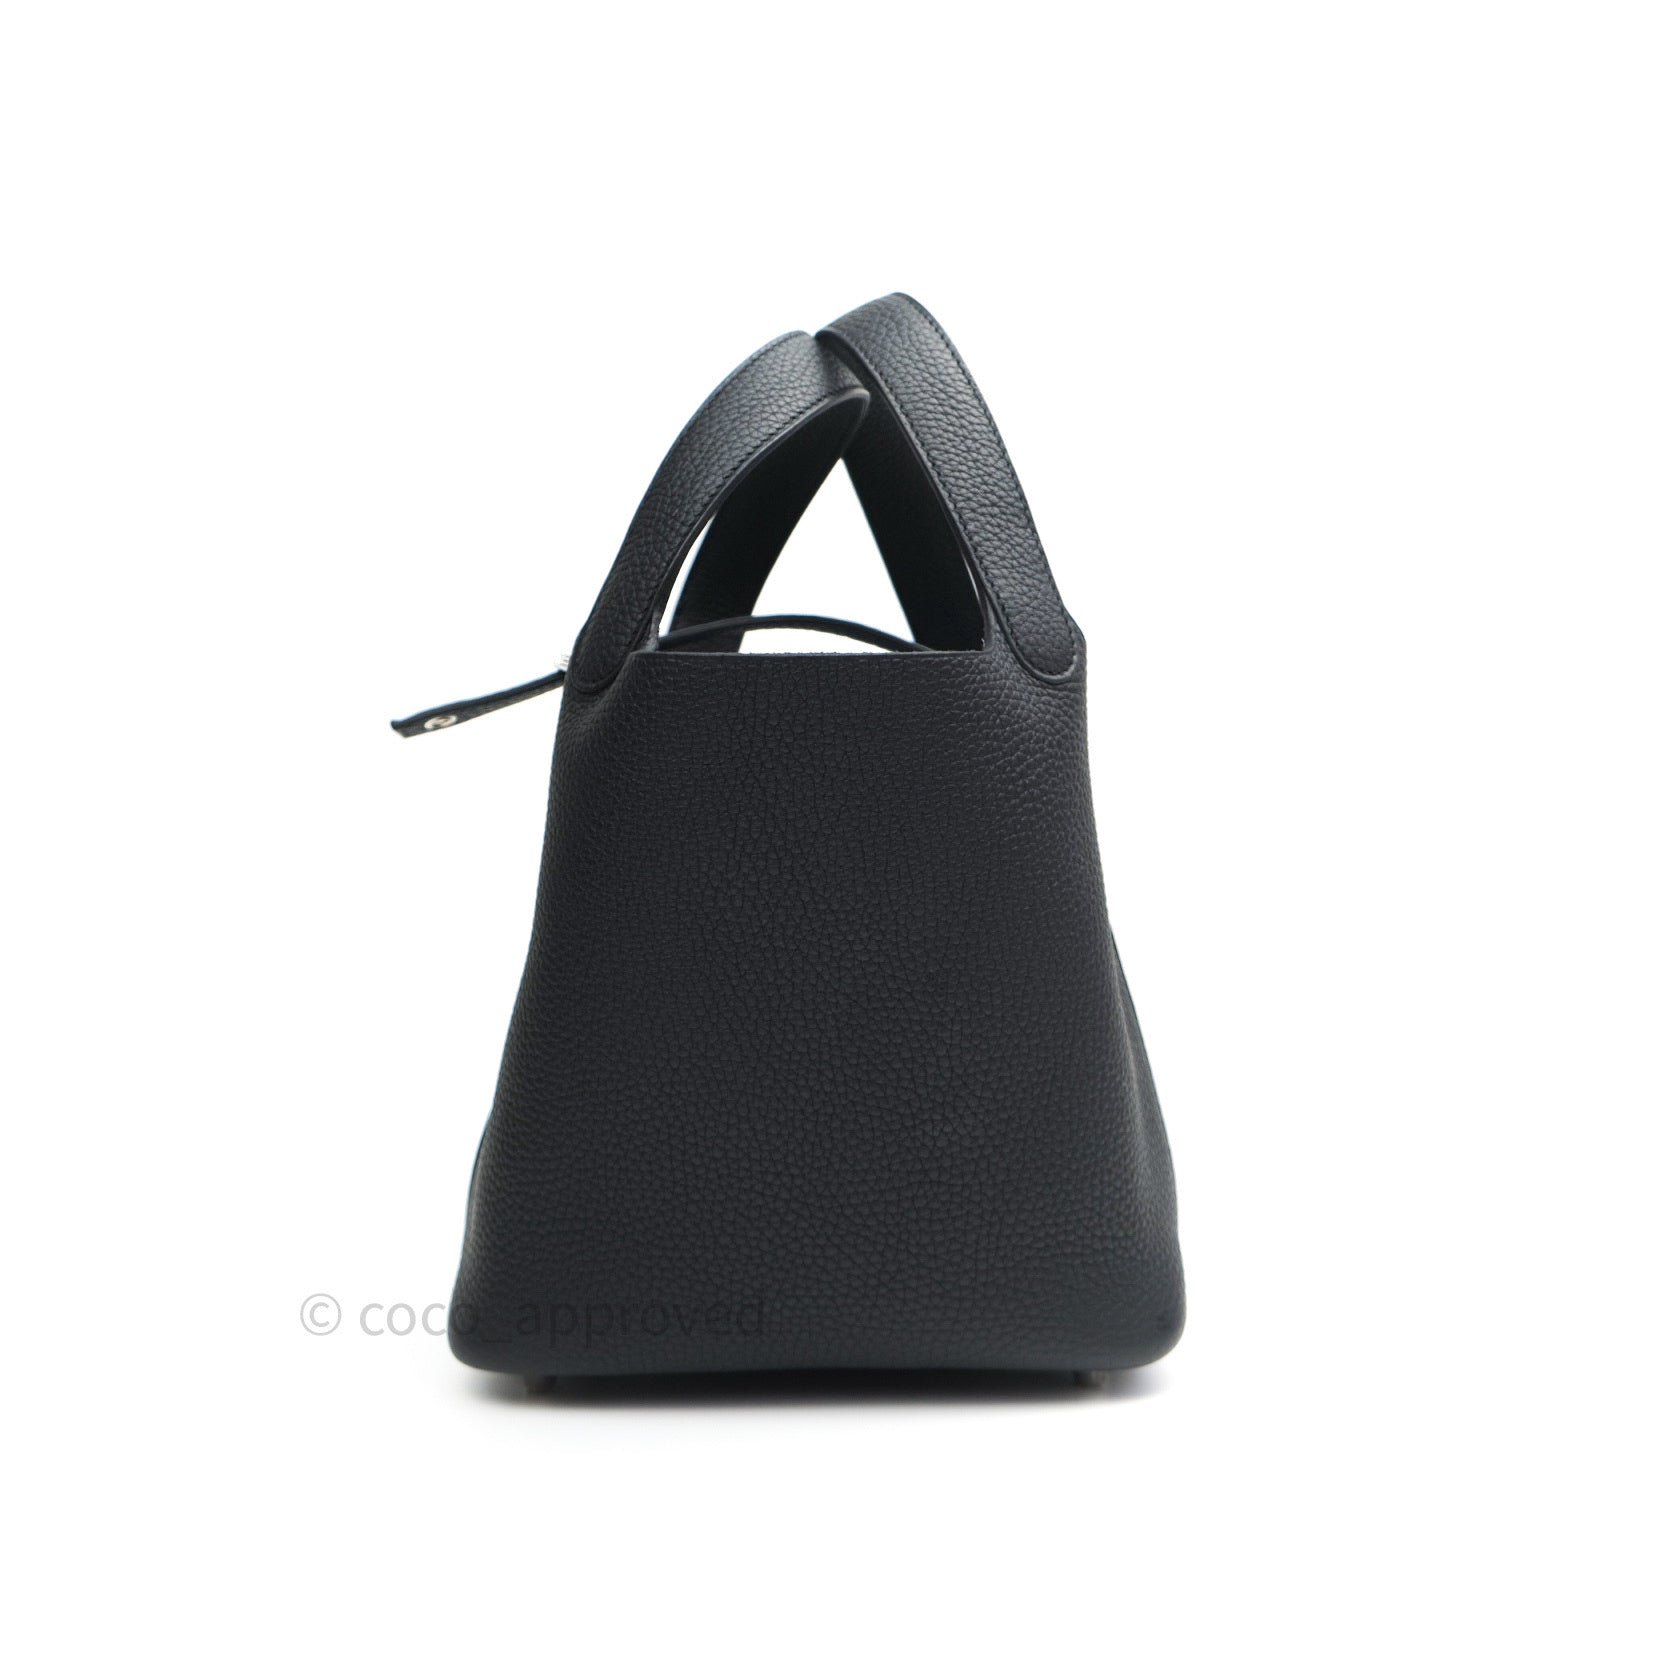 HERMES Picotin Lock 18 Taurillon Clemence Handbag in Bi-Color Black & Navy  – GHW (Stamp Y)